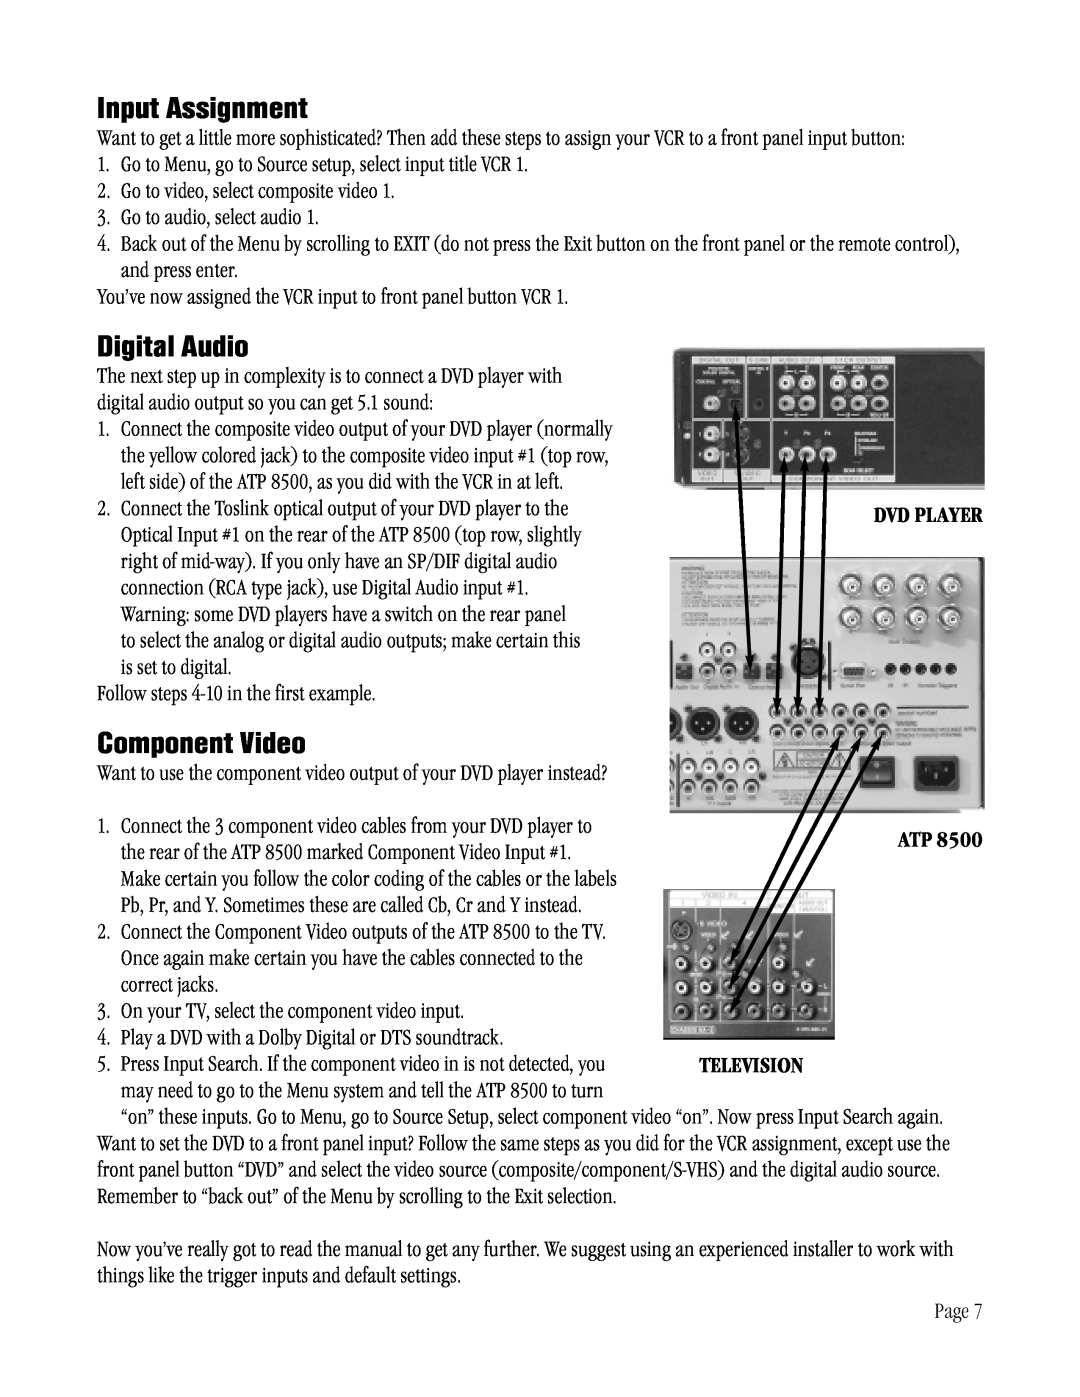 ATI Technologies ATP 8500 manual Input Assignment, Digital Audio, Component Video, Television 